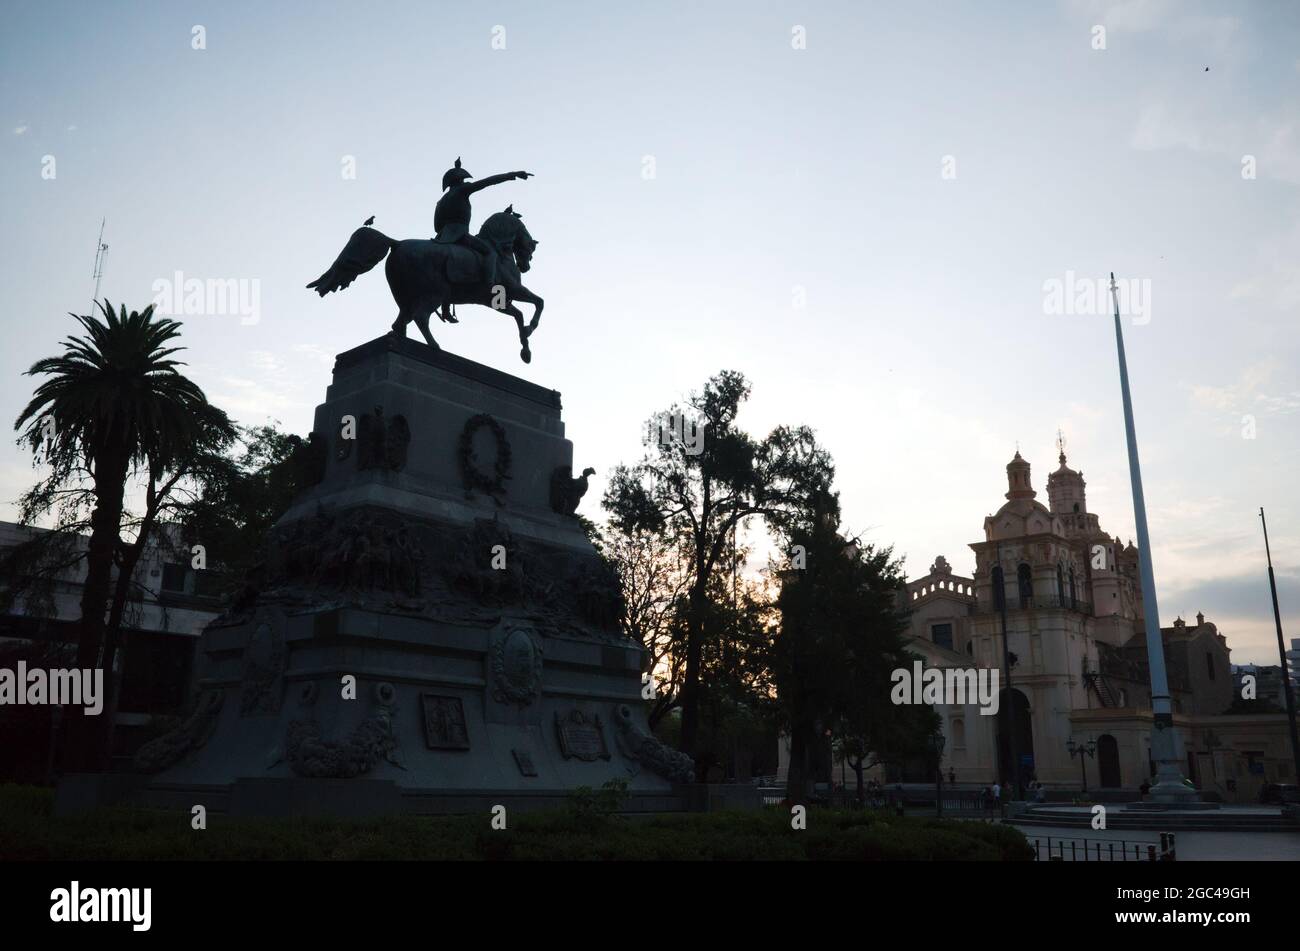 Cordoba, Argentina - January, 2020: Silhouette of statue of General San Martin on horseback in Plaza San Martin at dusk Stock Photo